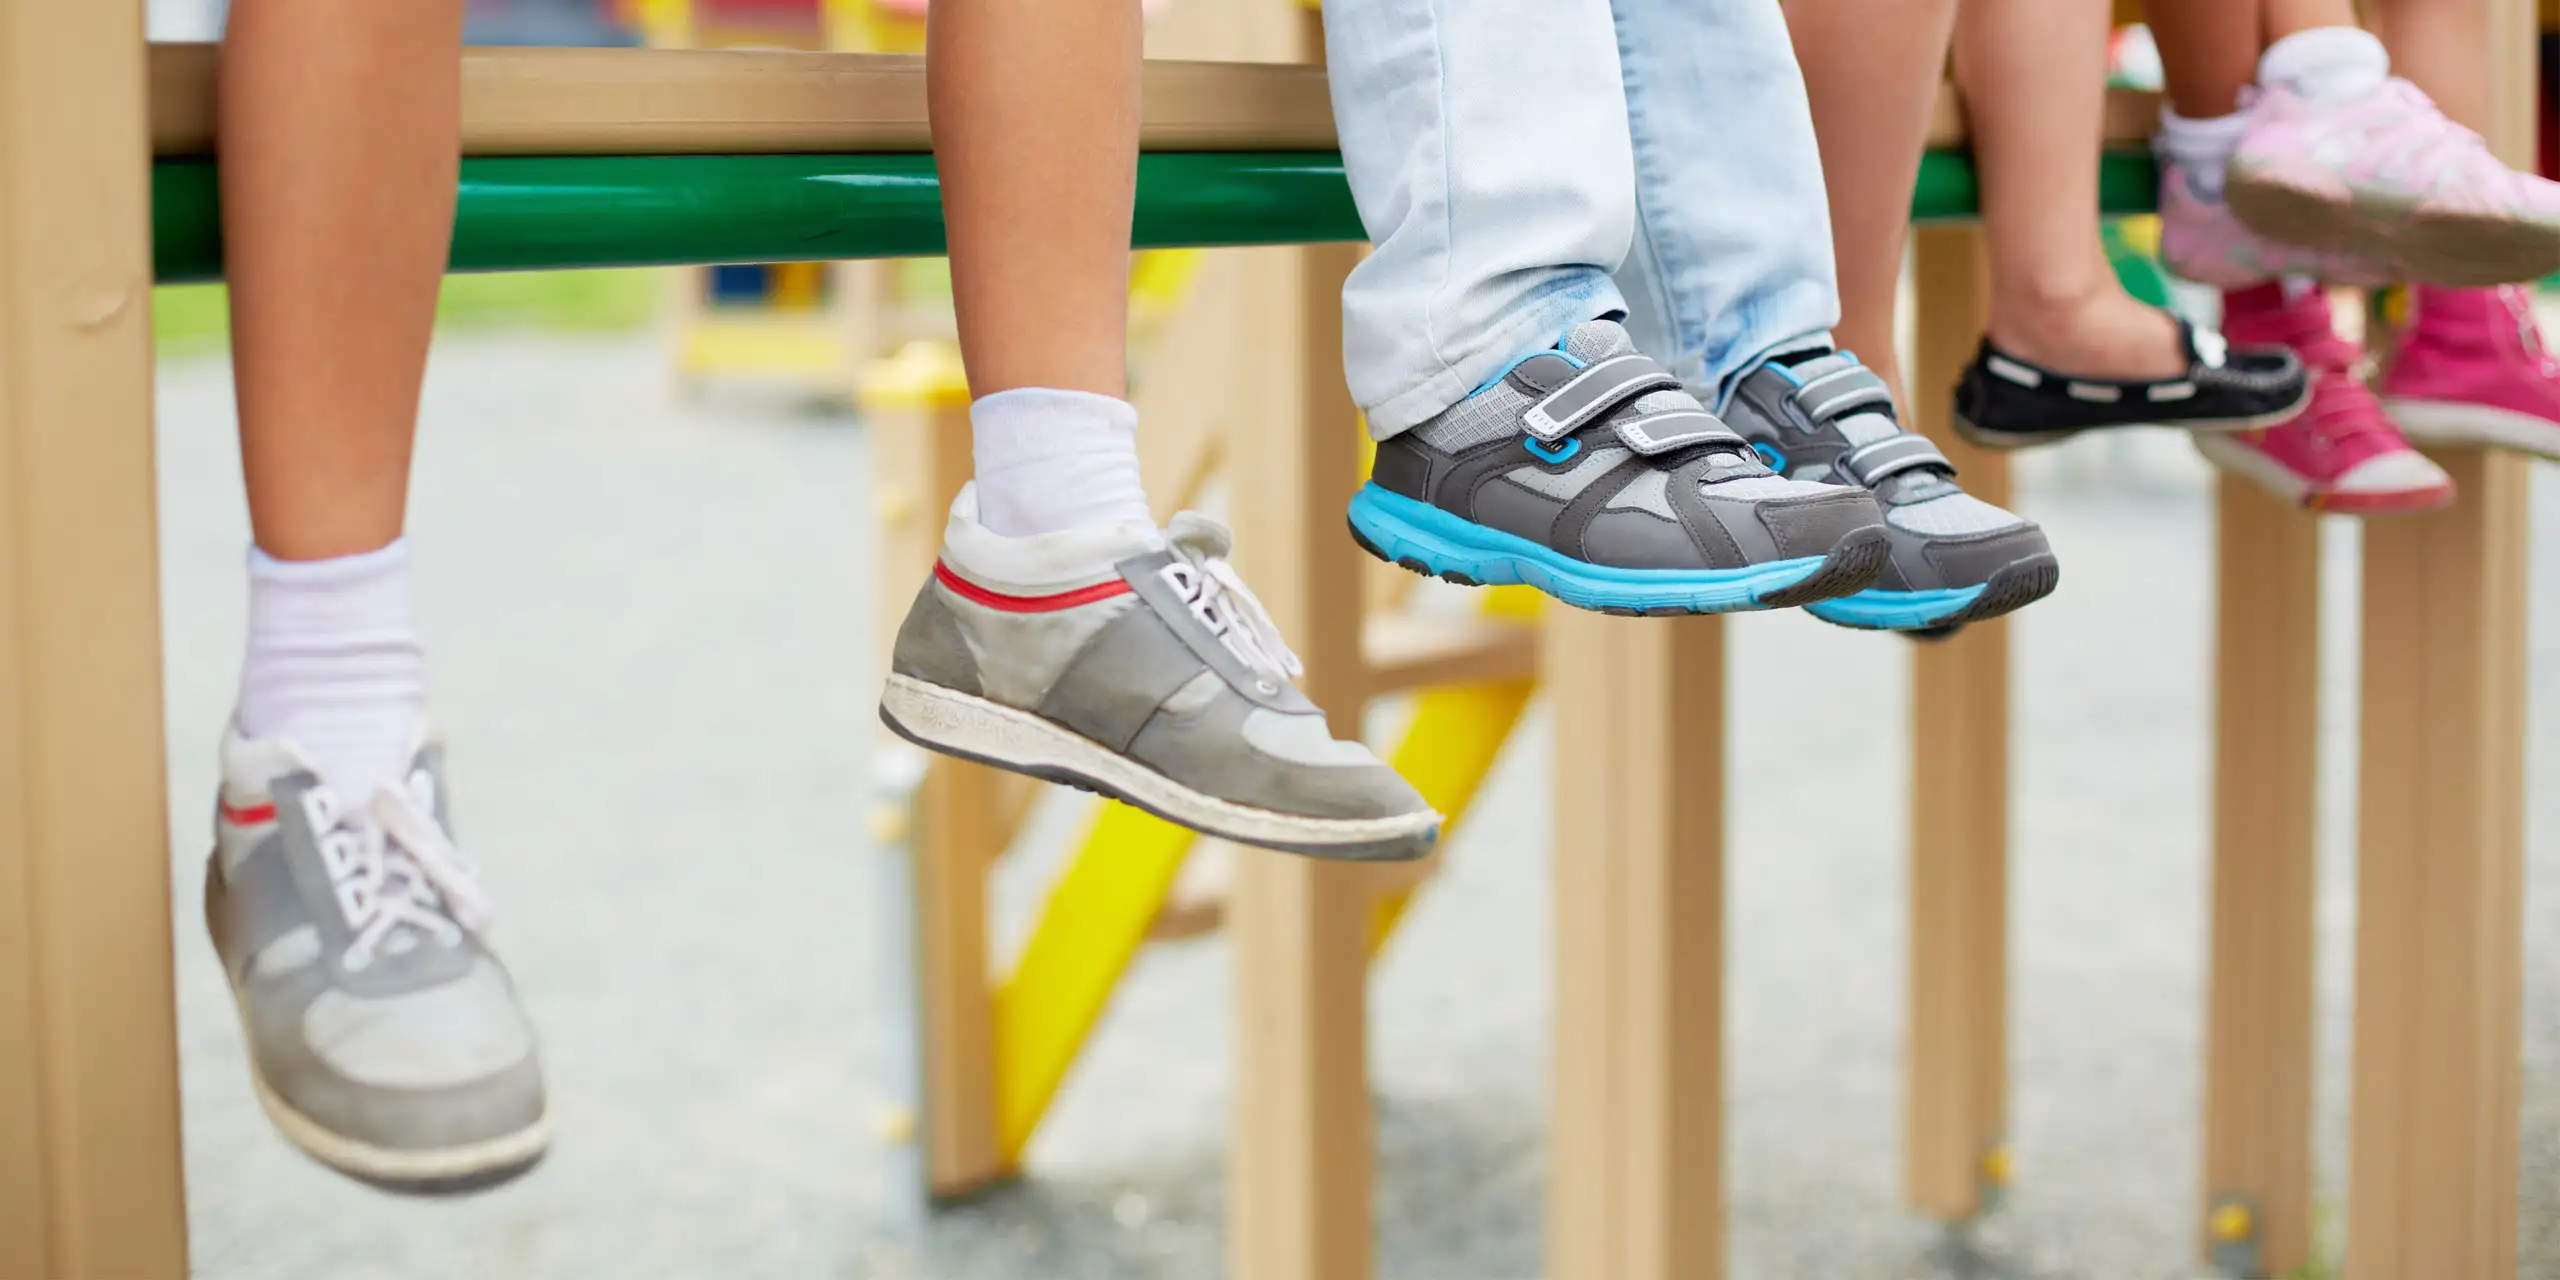 Kids Shoes; Courtesy of Pressmaster/Shutterstock.com